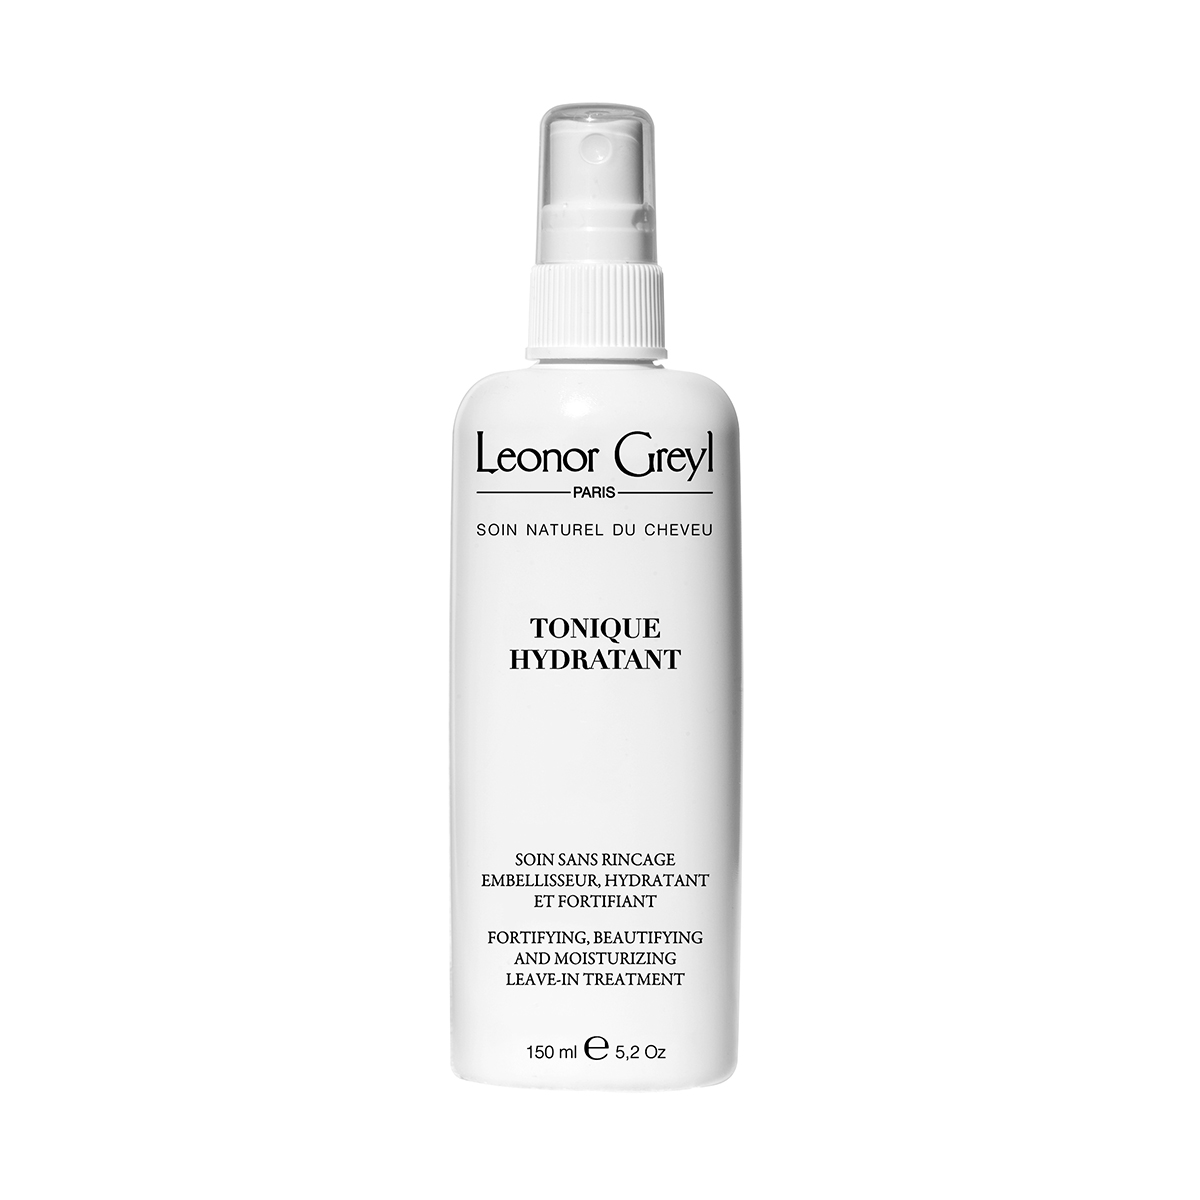 Tonique Leonor Greyl tăng độ ẩm và bảo vệ tóc Leonor Greyl - Tonique Hydratant 150ml